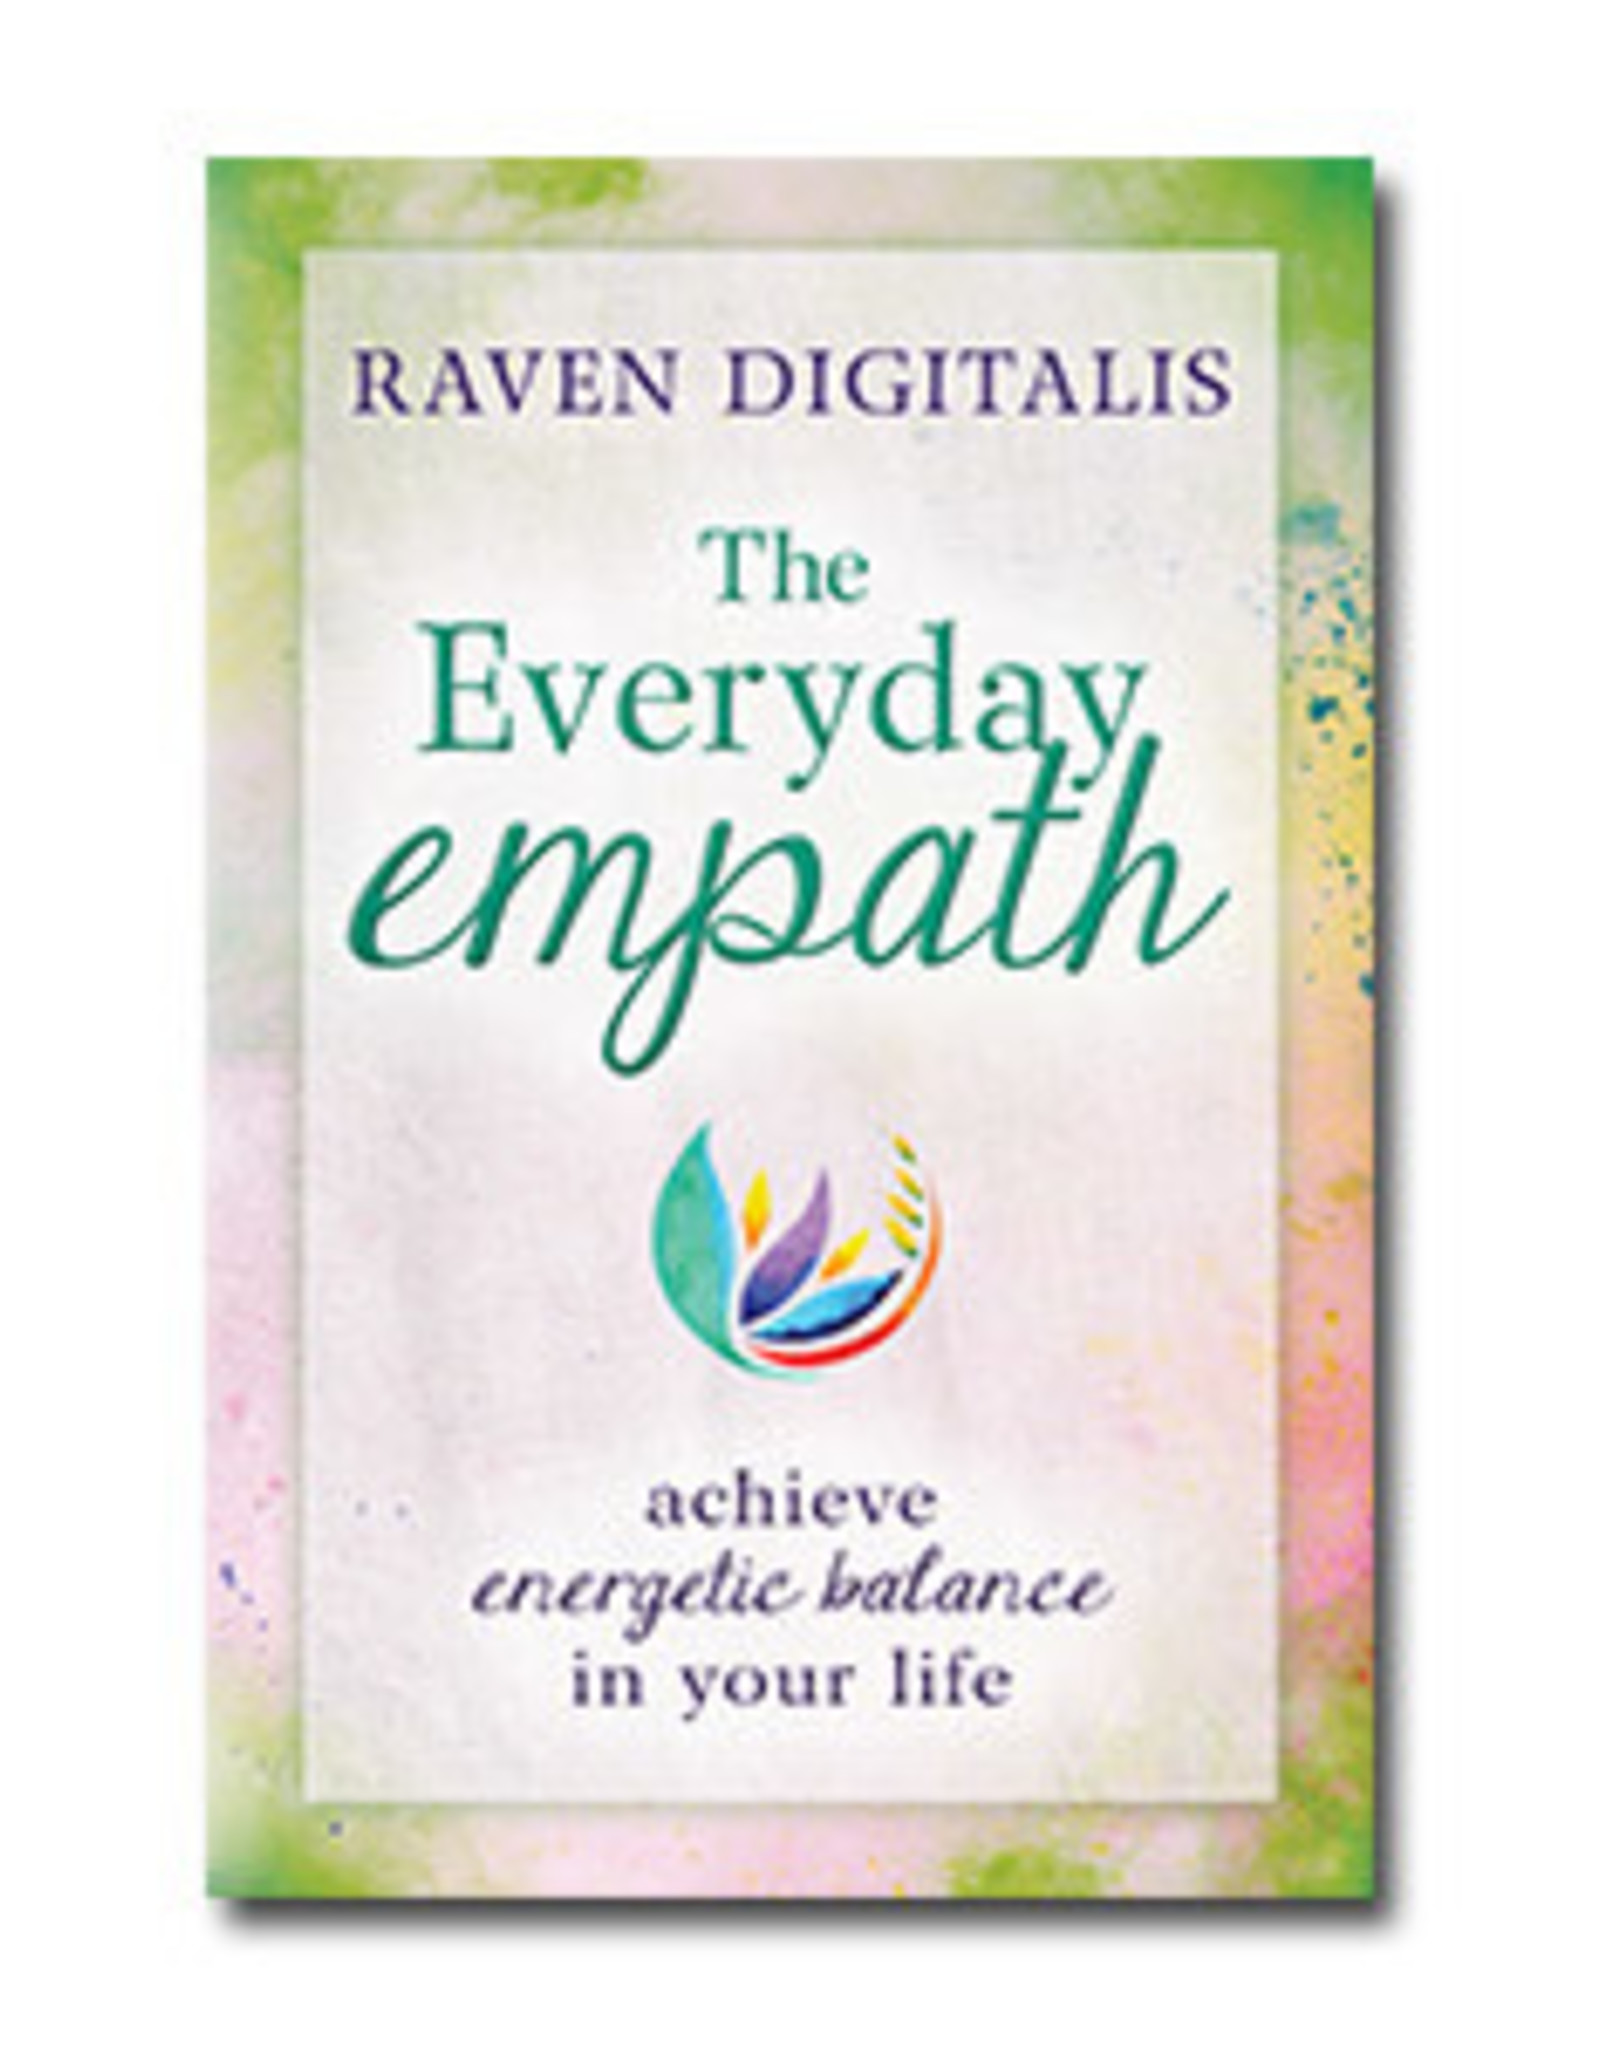 Raven Digitalis Everyday Empath by Raven Digitalis